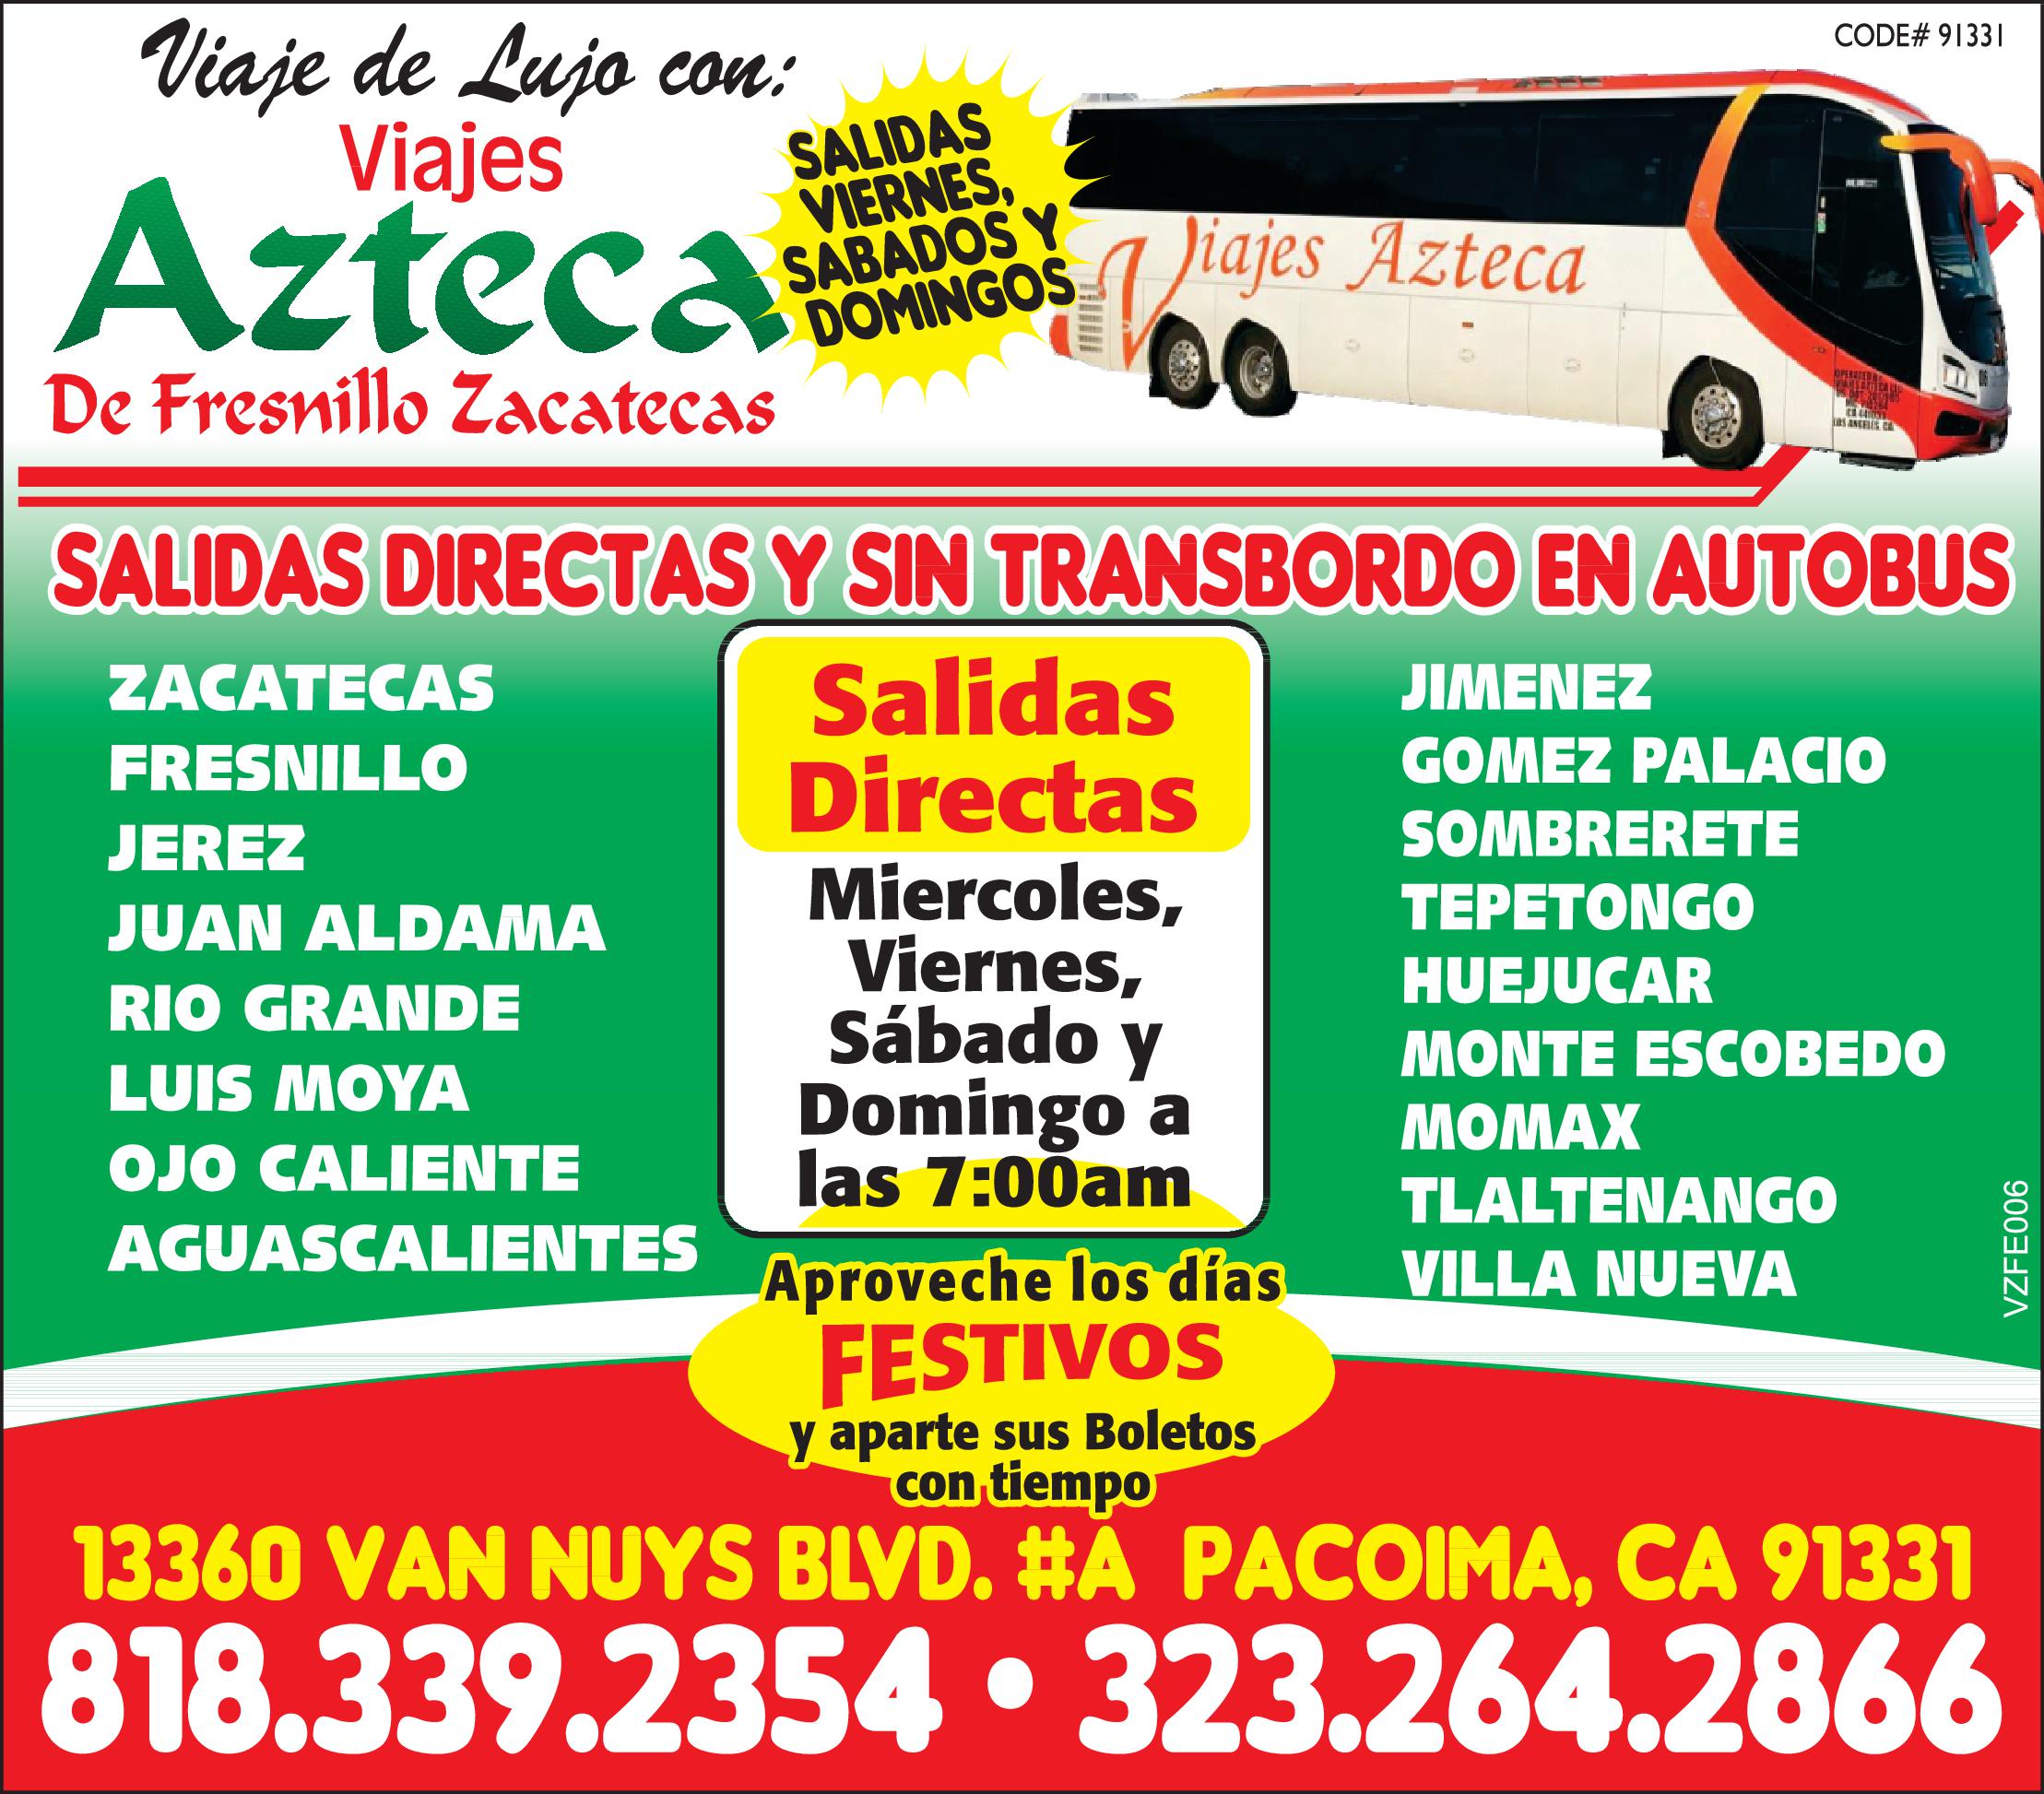 Viajes Azteca de Fresnillo